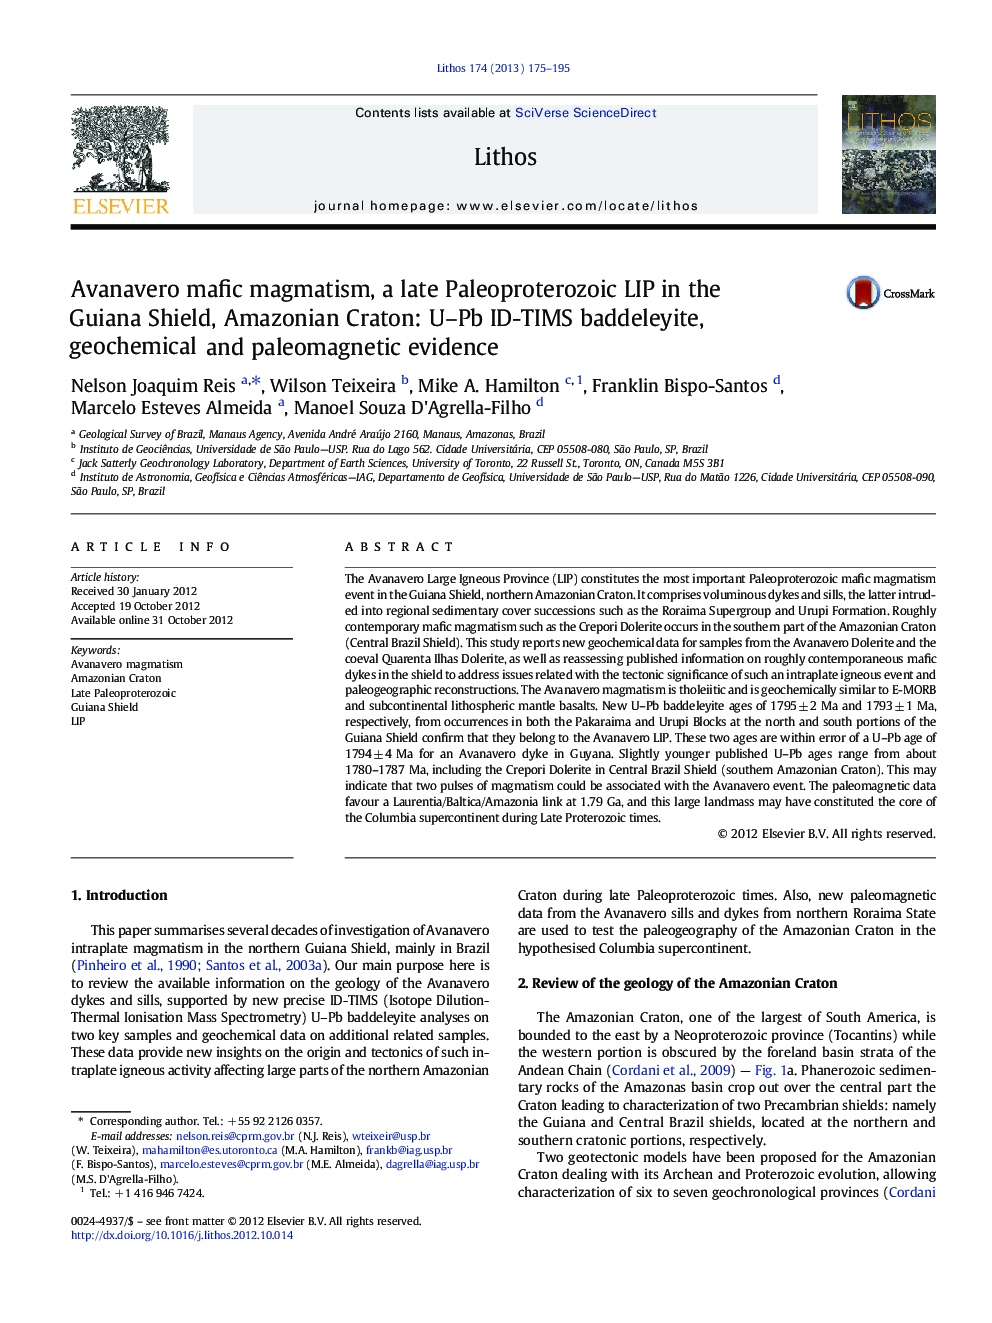 Avanavero mafic magmatism, a late Paleoproterozoic LIP in the Guiana Shield, Amazonian Craton: U–Pb ID-TIMS baddeleyite, geochemical and paleomagnetic evidence